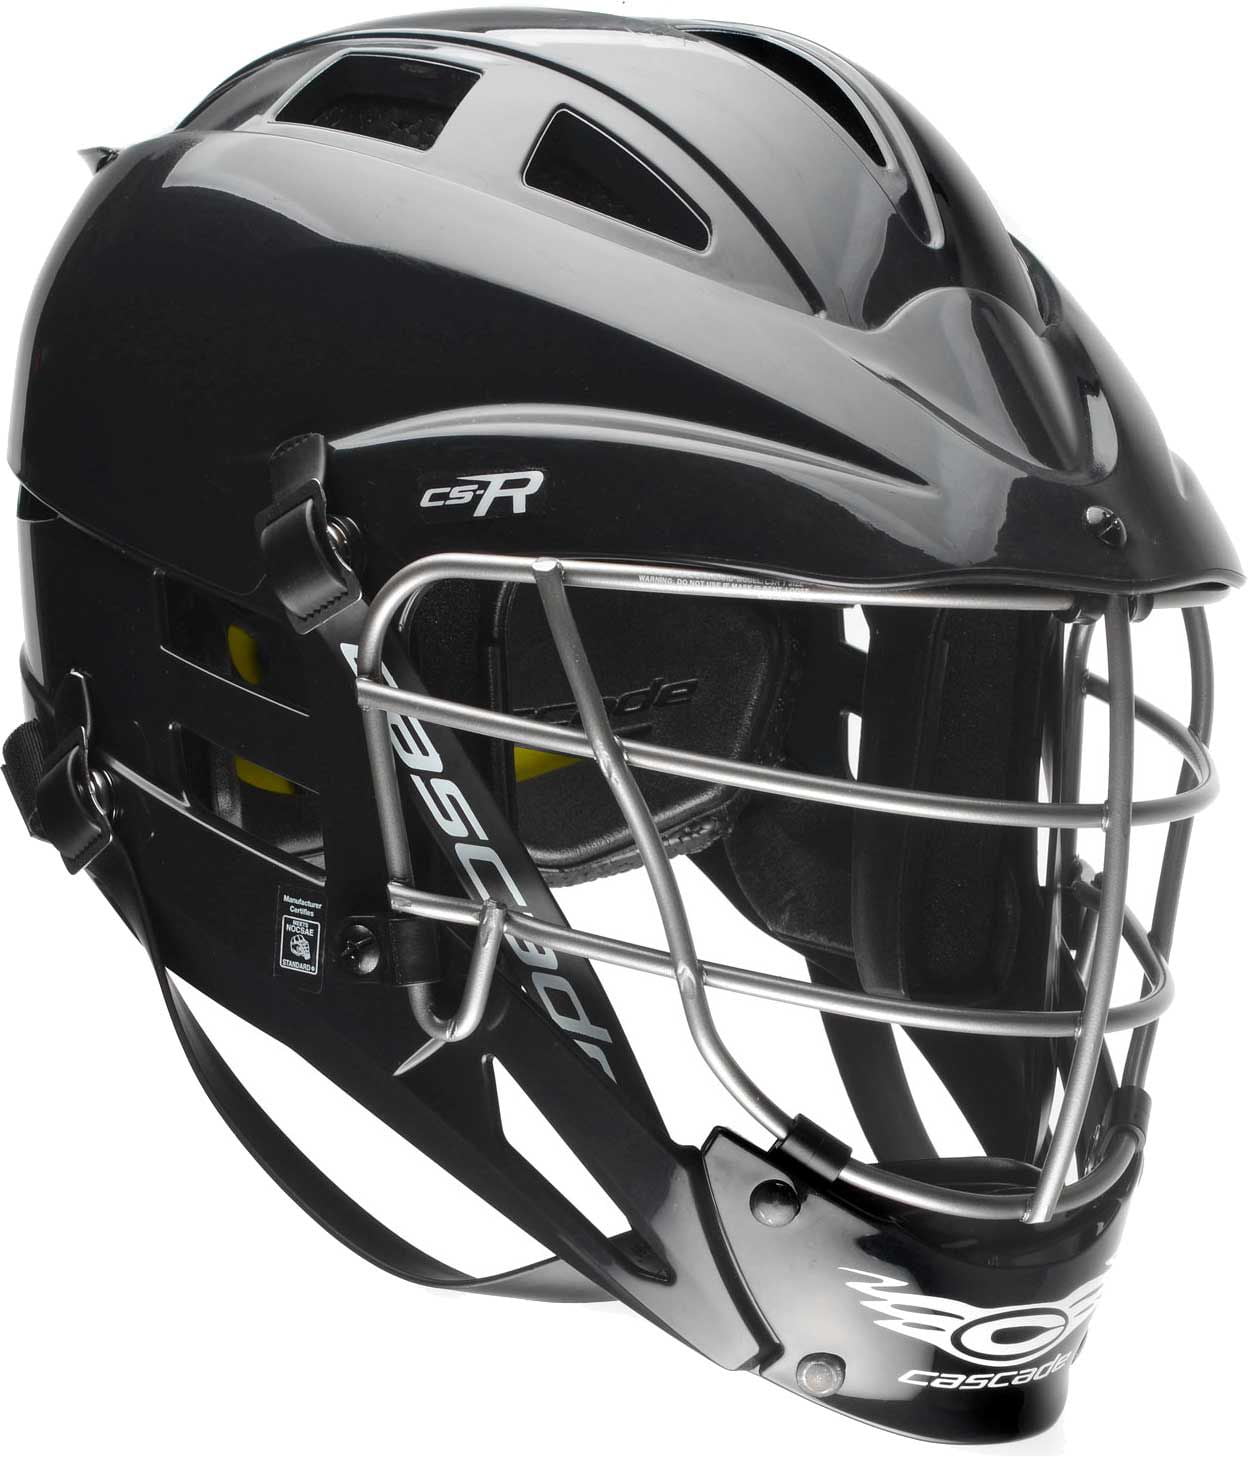 Cascade Clh2 Lacrosse Helmet Sizing Chart